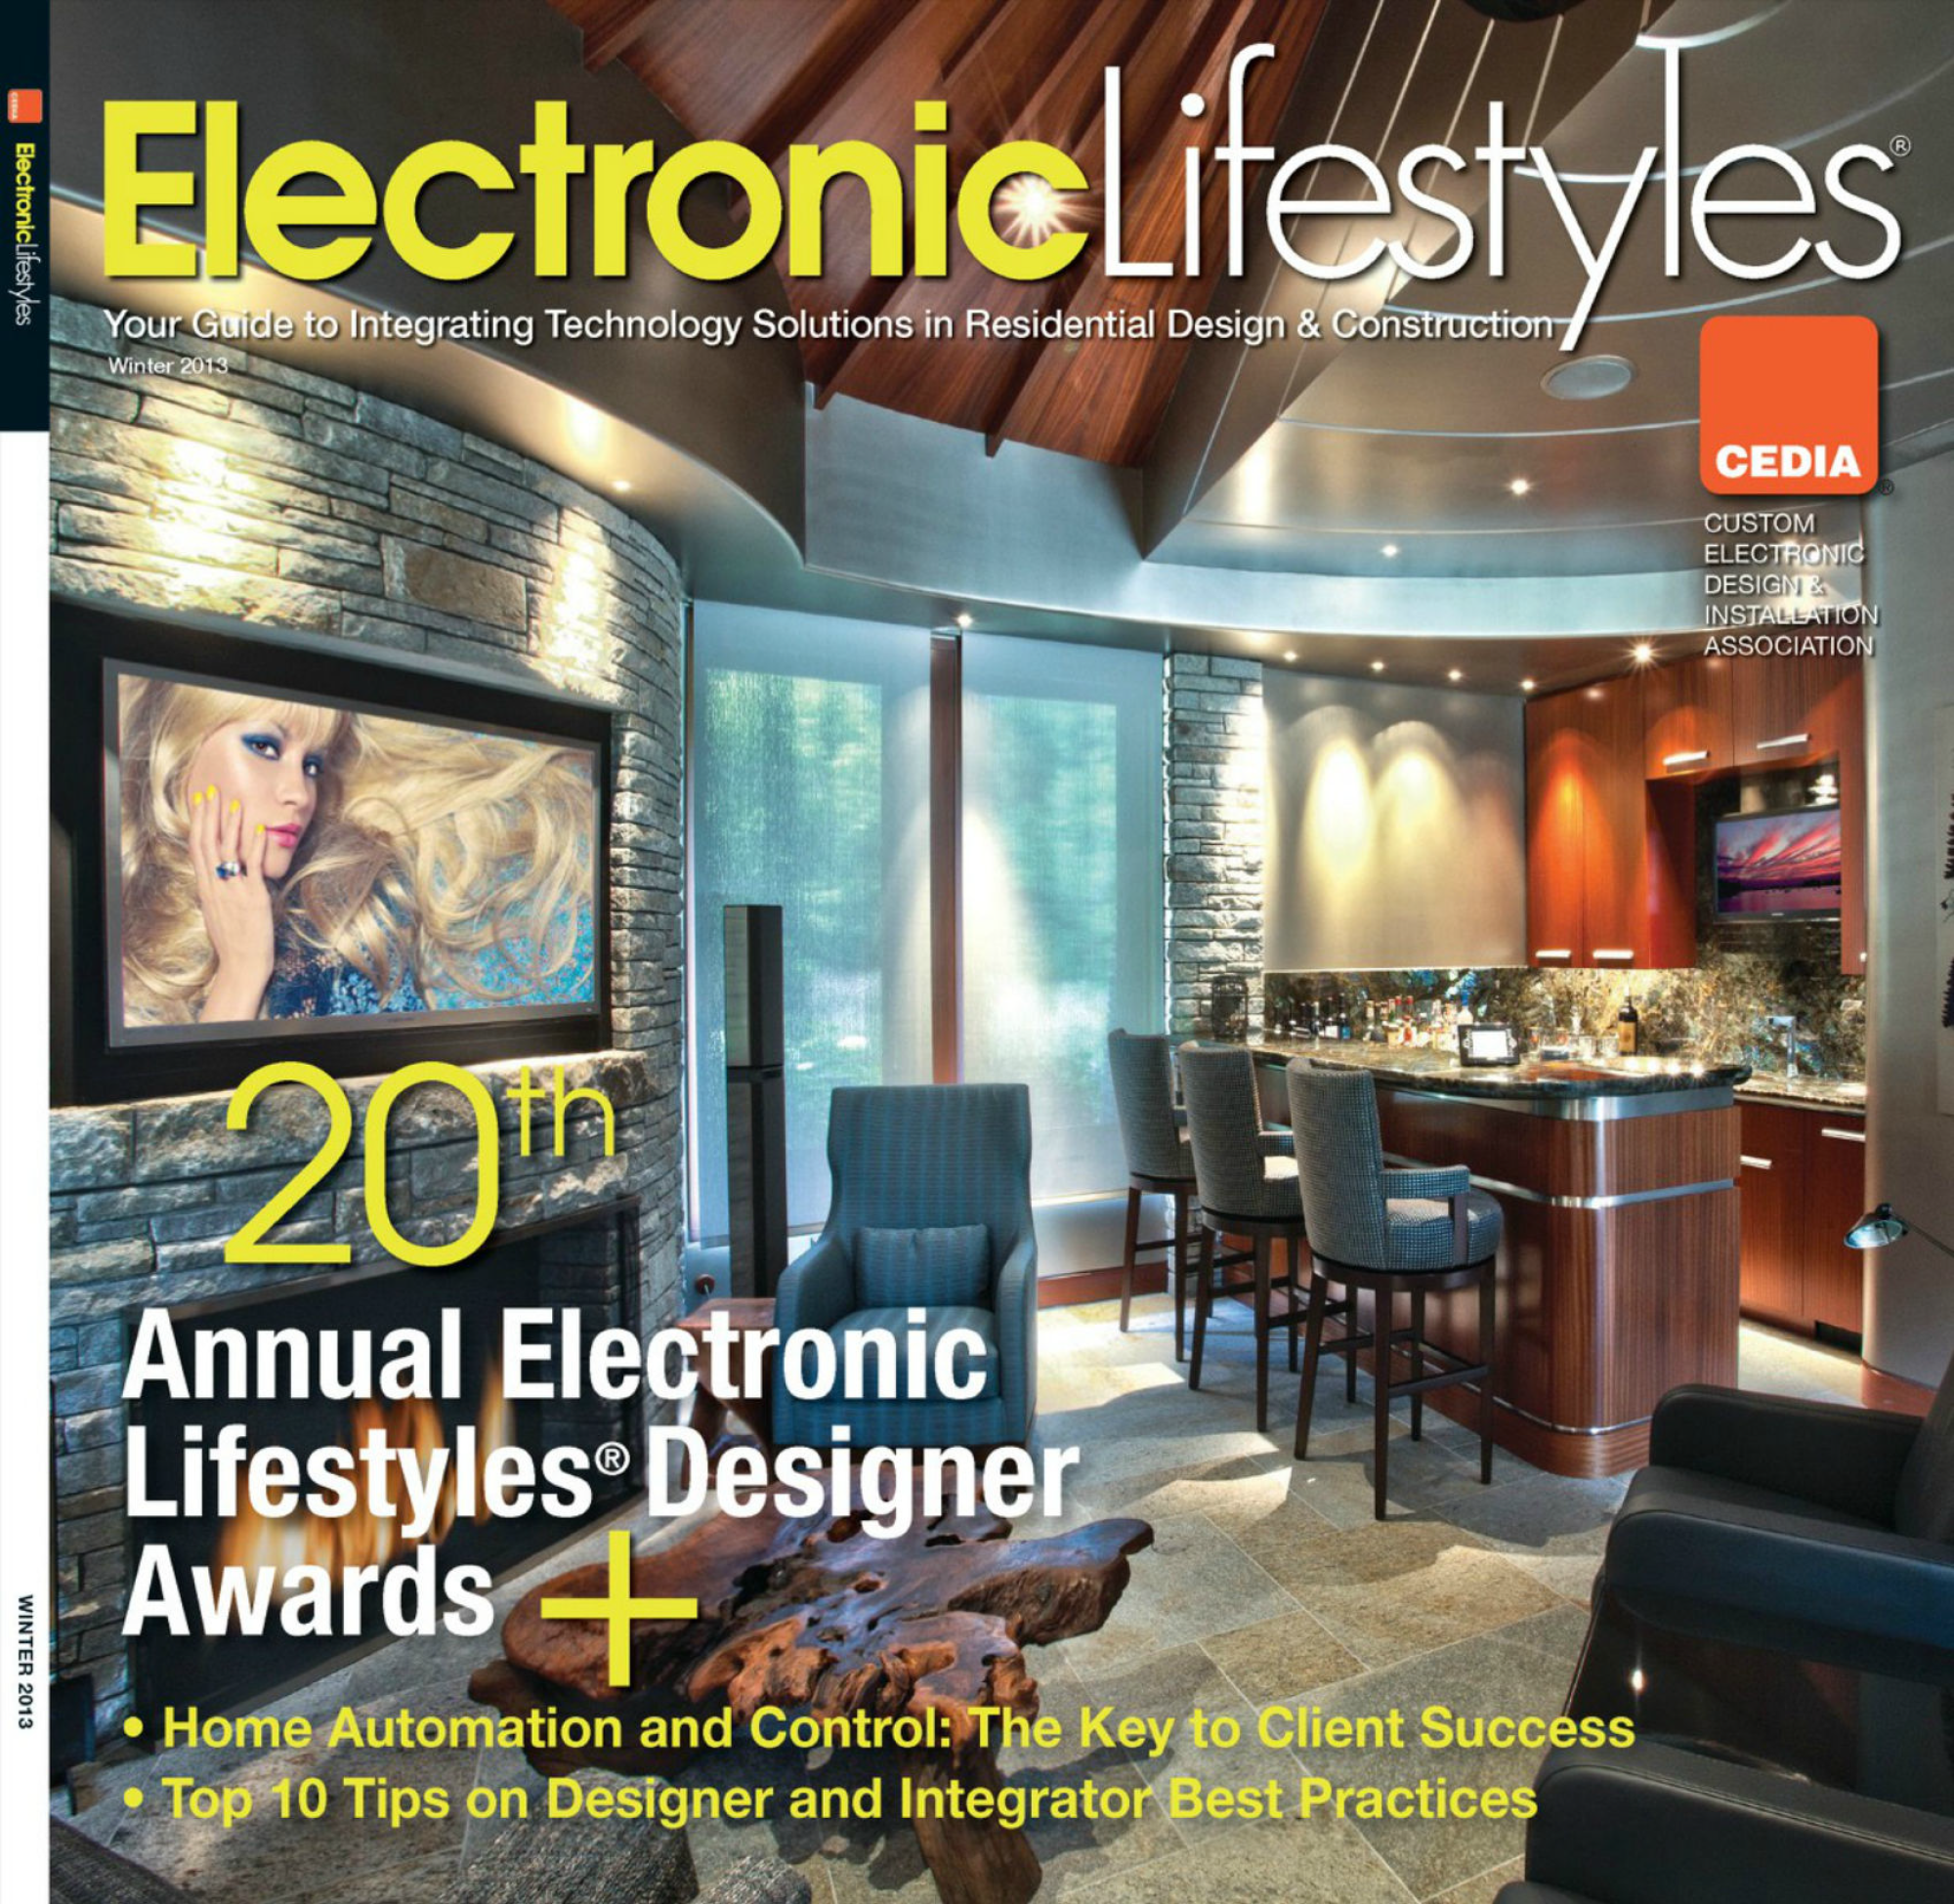 Annual Electronic Lifestyles Designer Awards